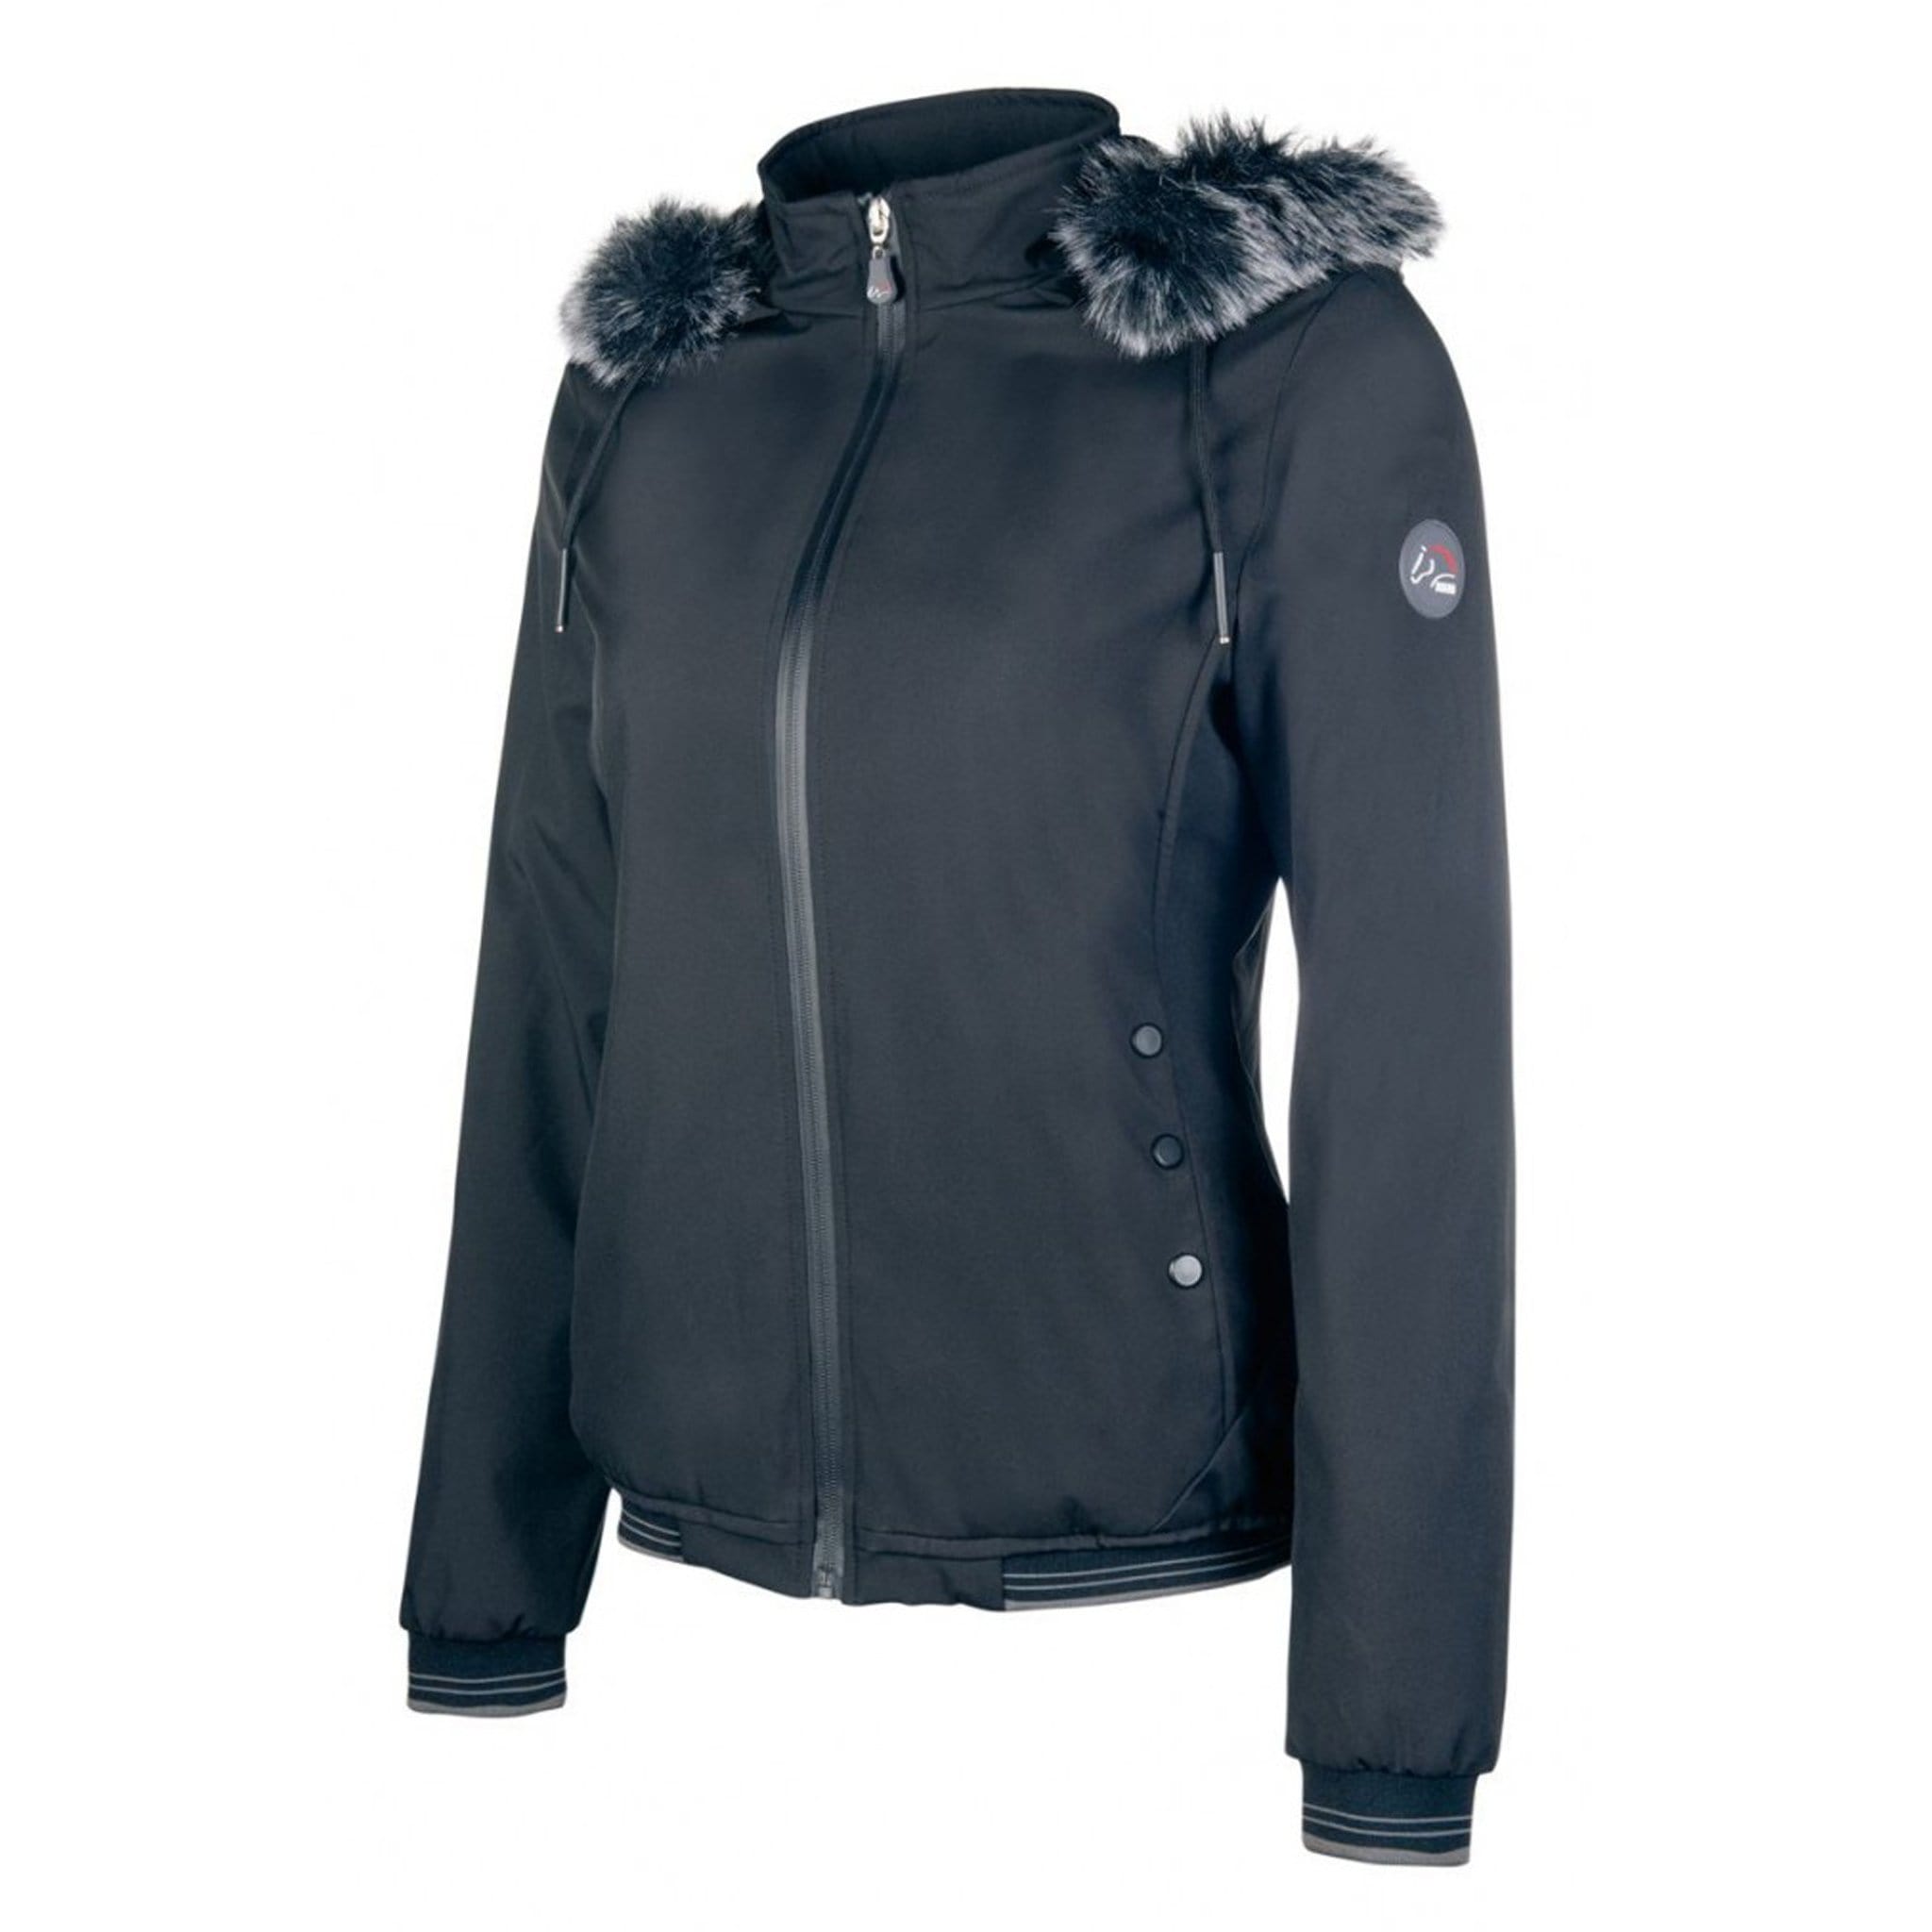 HKM Trend Winter Jacket 9799 Black Front SIde View